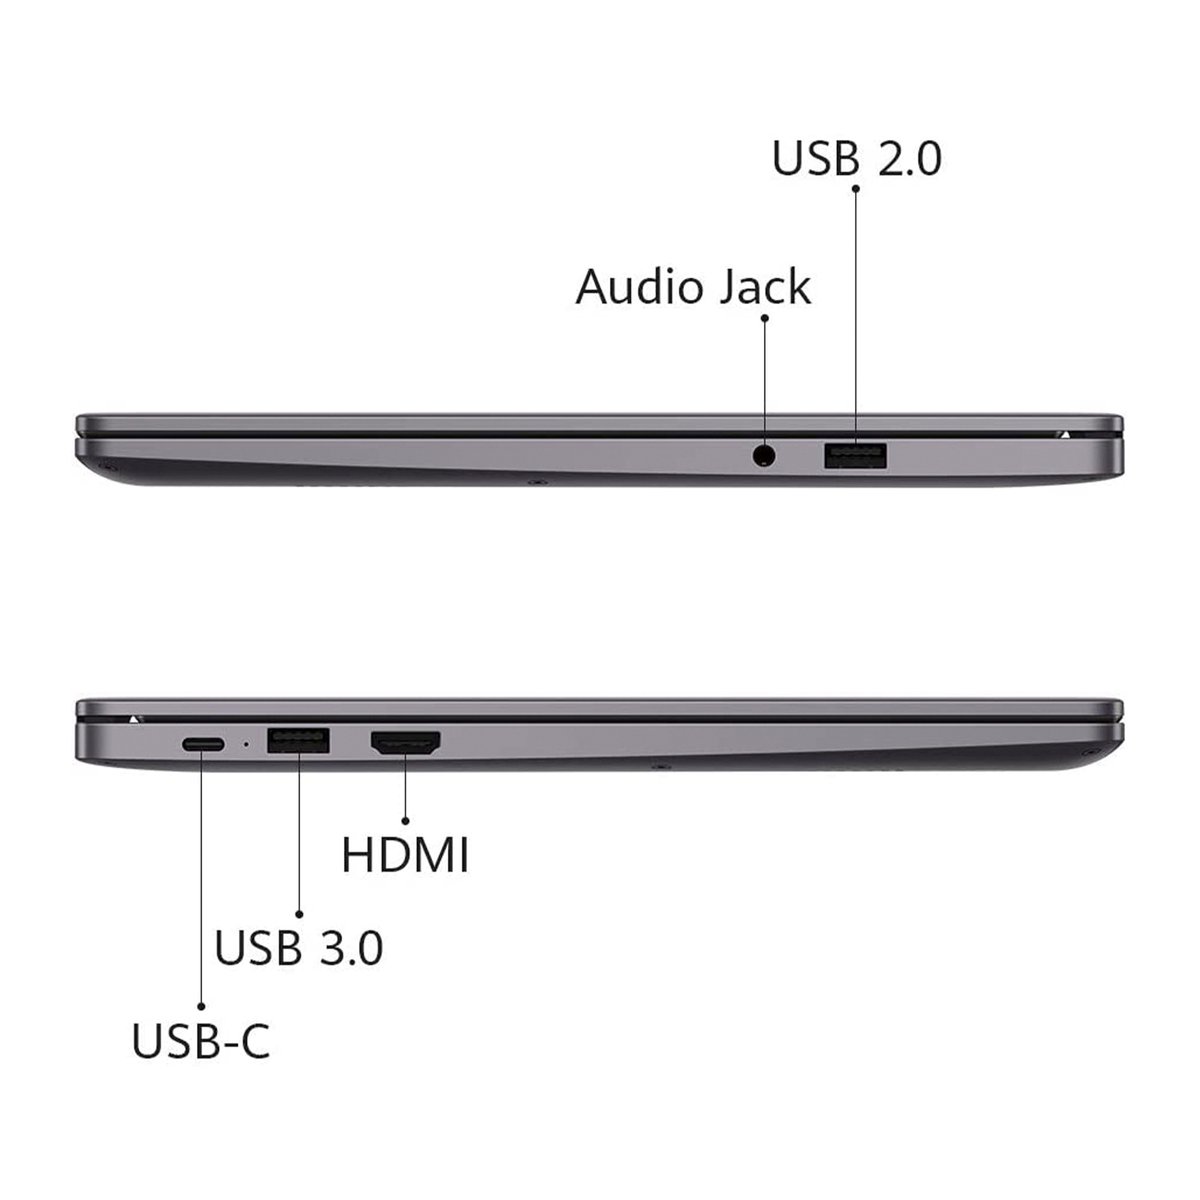 Huawei MateBook D 14 Laptop,Core i7-10510U, 16GB RAM, 512GB SSD,NVIDIA GeForce MX250 GDDR5 2GB Graphic 14" Laptop, Space Grey